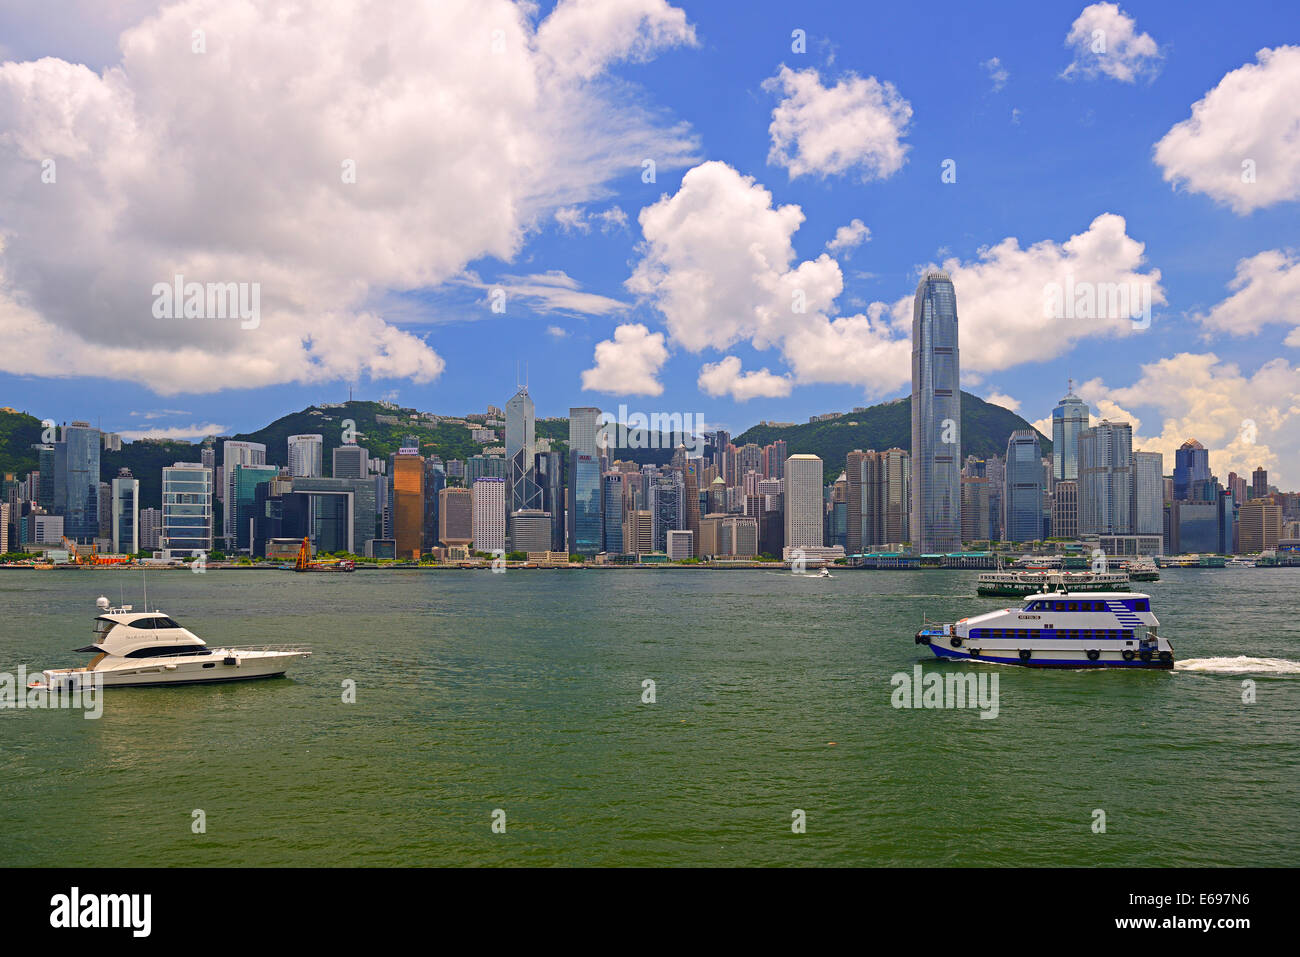 Skyline di Hong Kong Island e Hong Kong fiume, con Bank of China a sinistra e la IFC 2 torre destra, Kowloon, Hong Kong, Cina Foto Stock